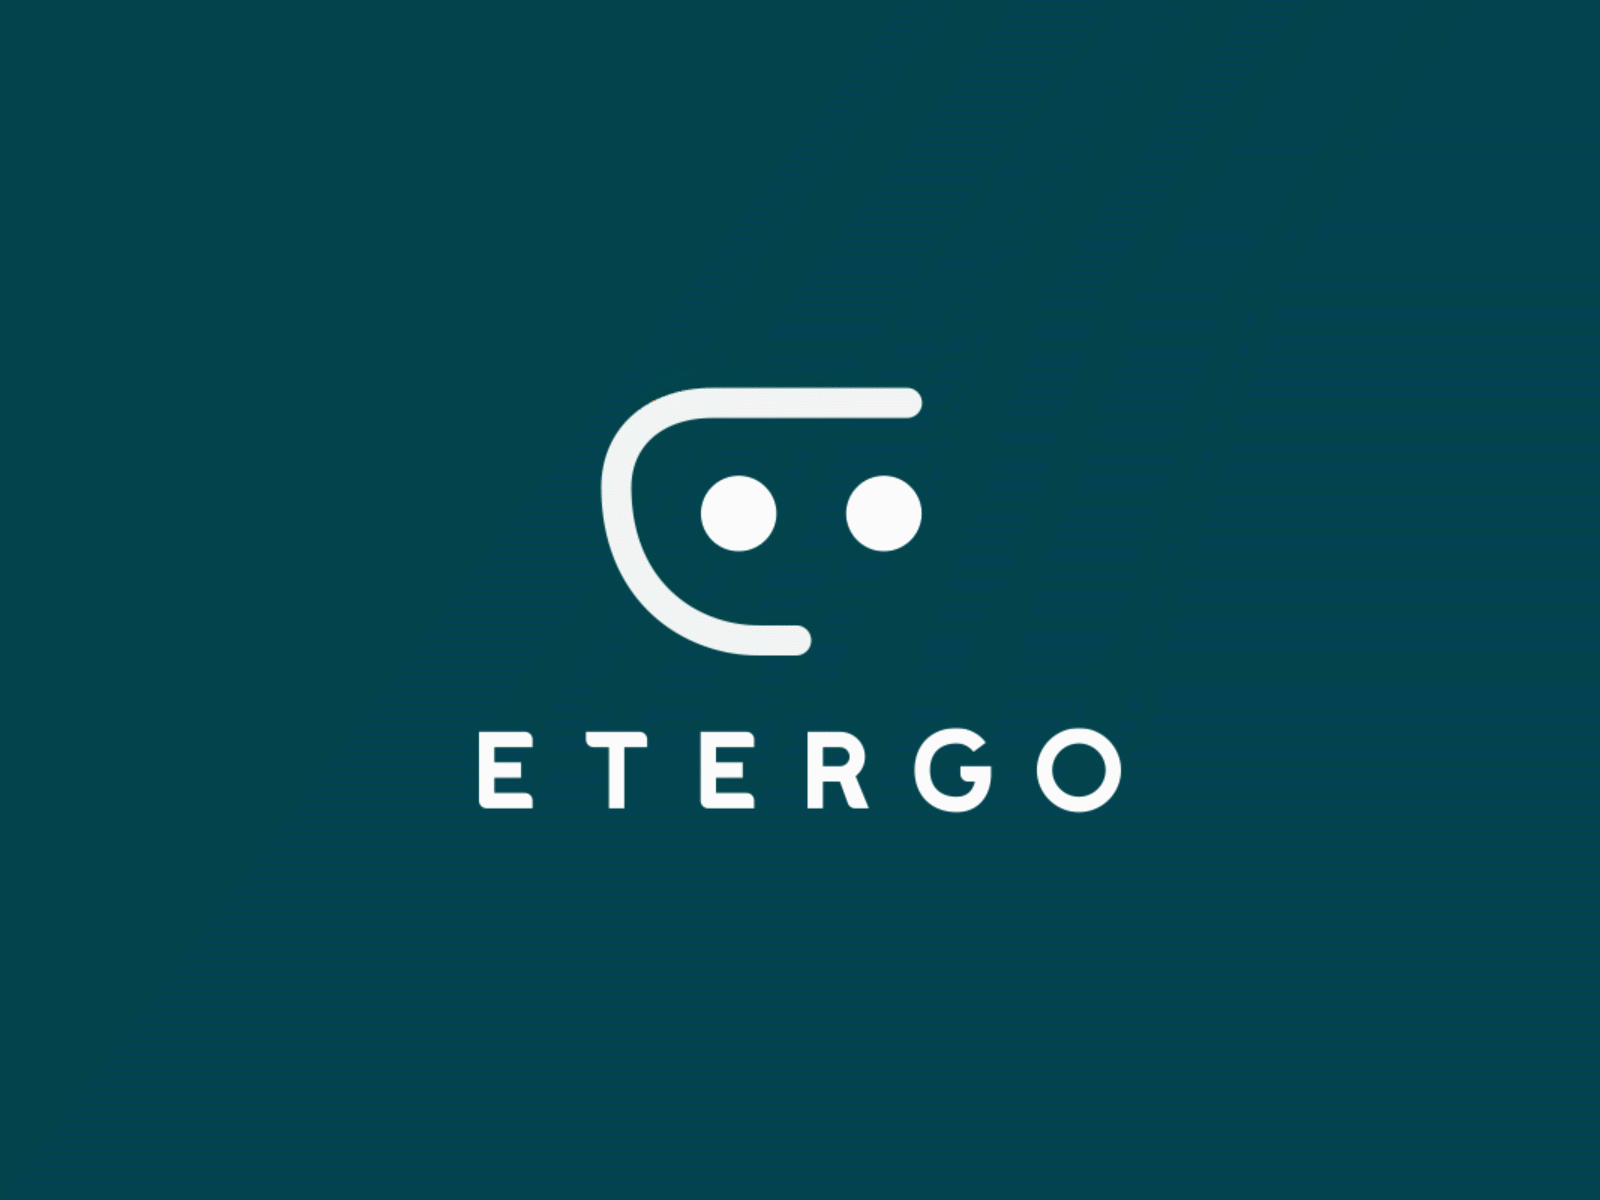 Etergo Logo Animation